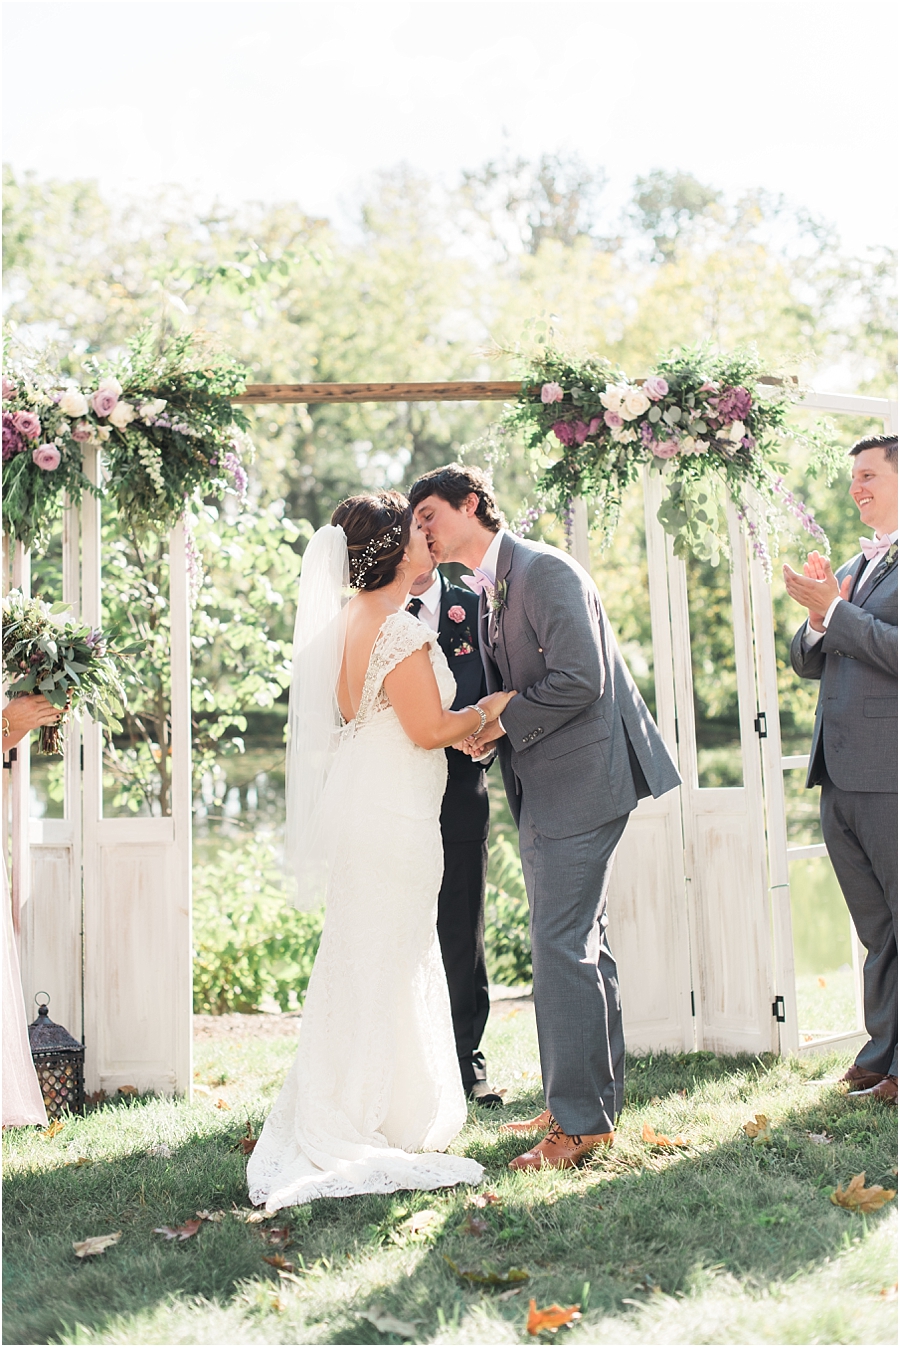 Beautiful Bell Gate Farm Wedding in Coopersburg Pennsylvania by Film Photographer Hillary Muelleck